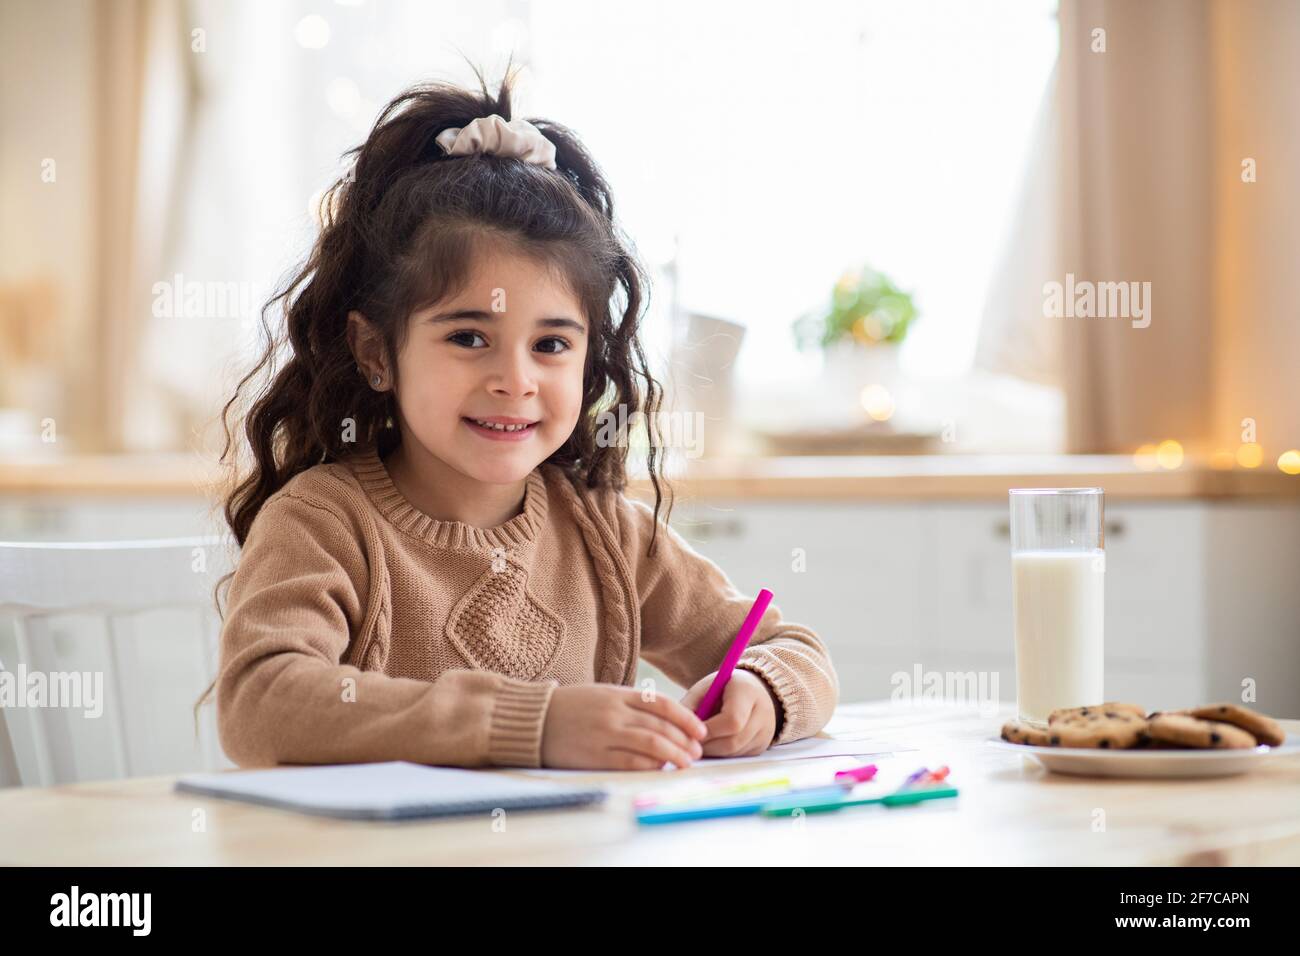 Children Development. Adorable Preschool Arab Girl Drawing In Kitchen At Home Stock Photo